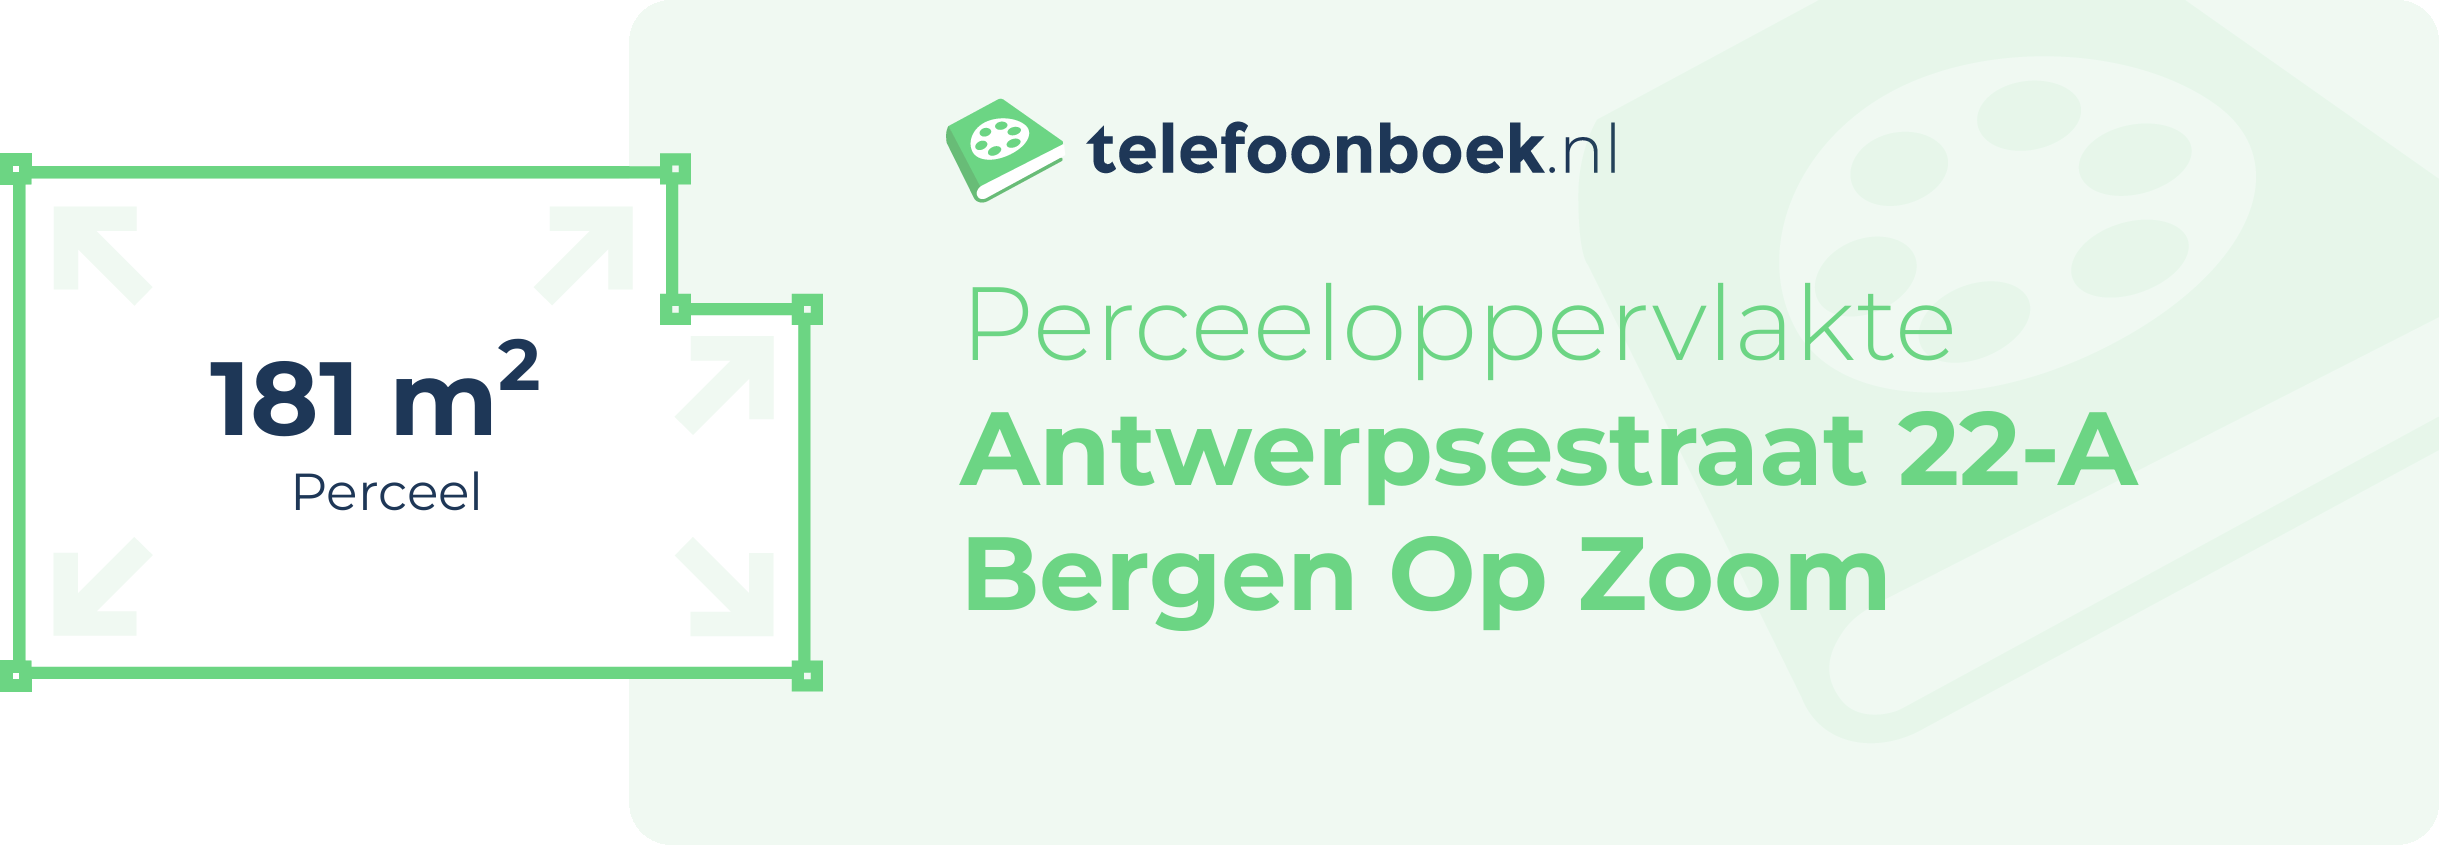 Perceeloppervlakte Antwerpsestraat 22-A Bergen Op Zoom